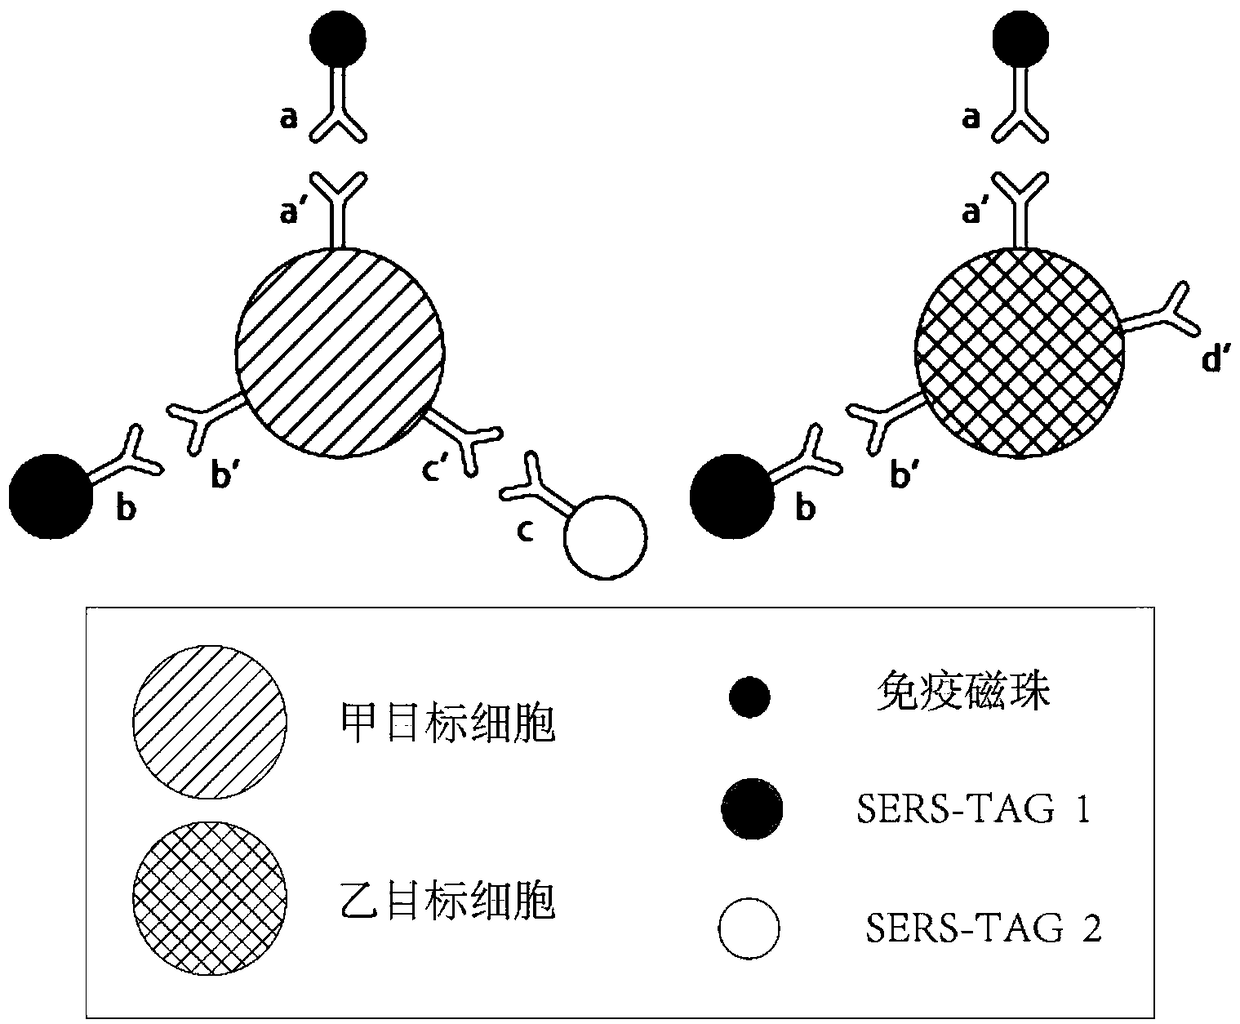 Immunomagnetic bead labeling-based SERS sorting method